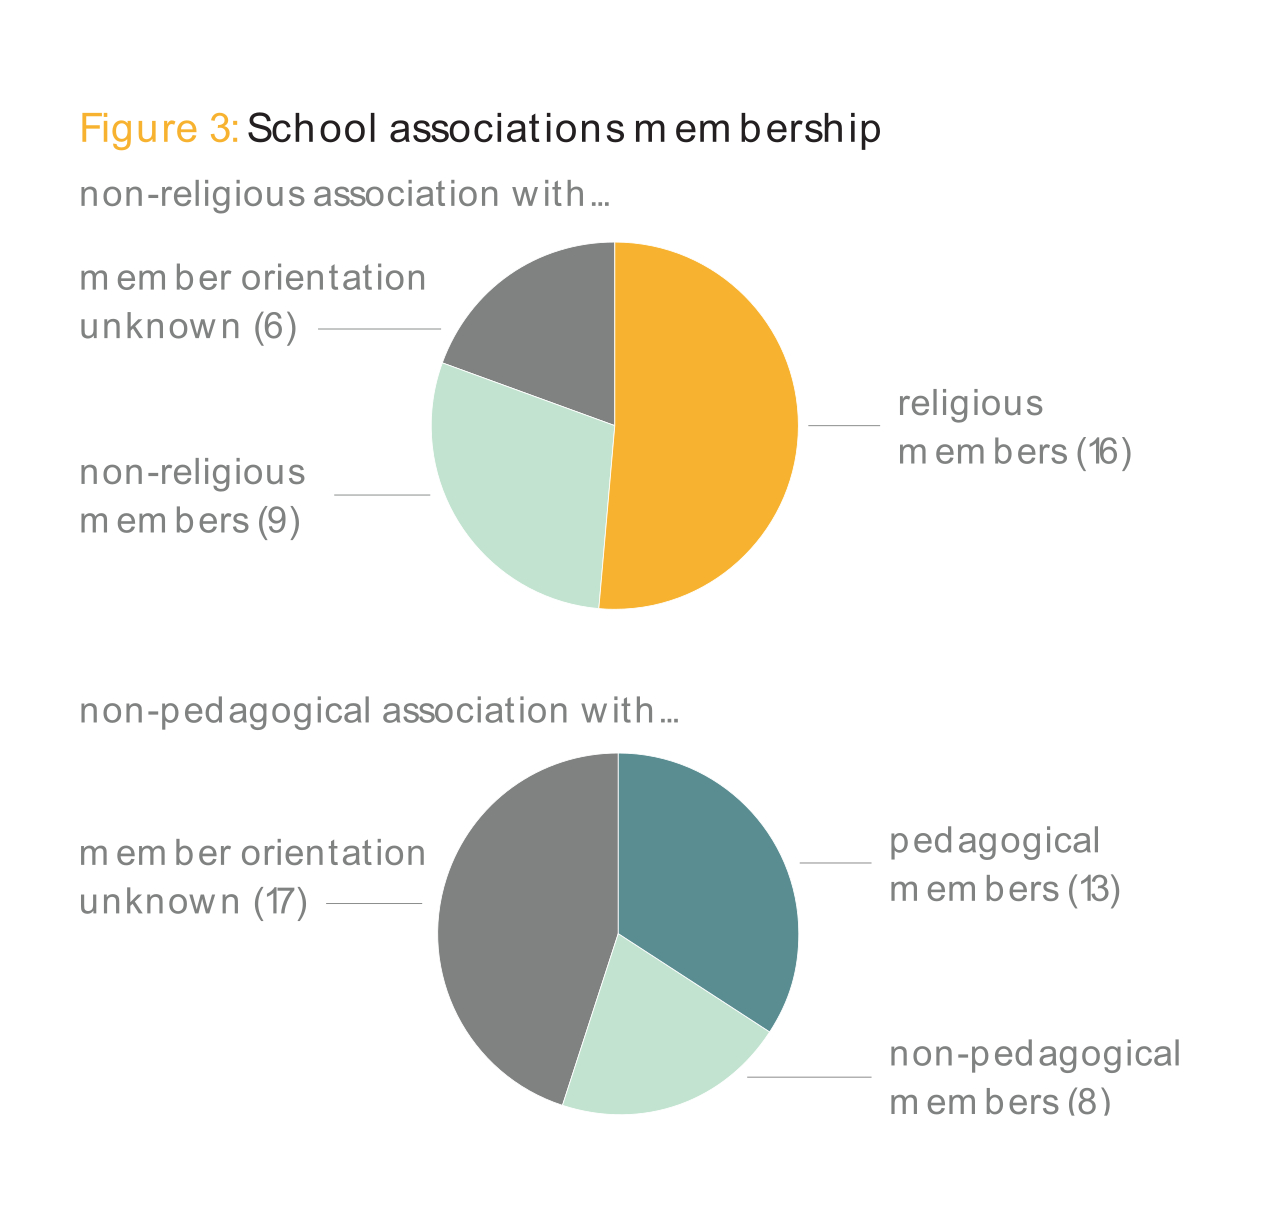 Figure 3: School associations membership